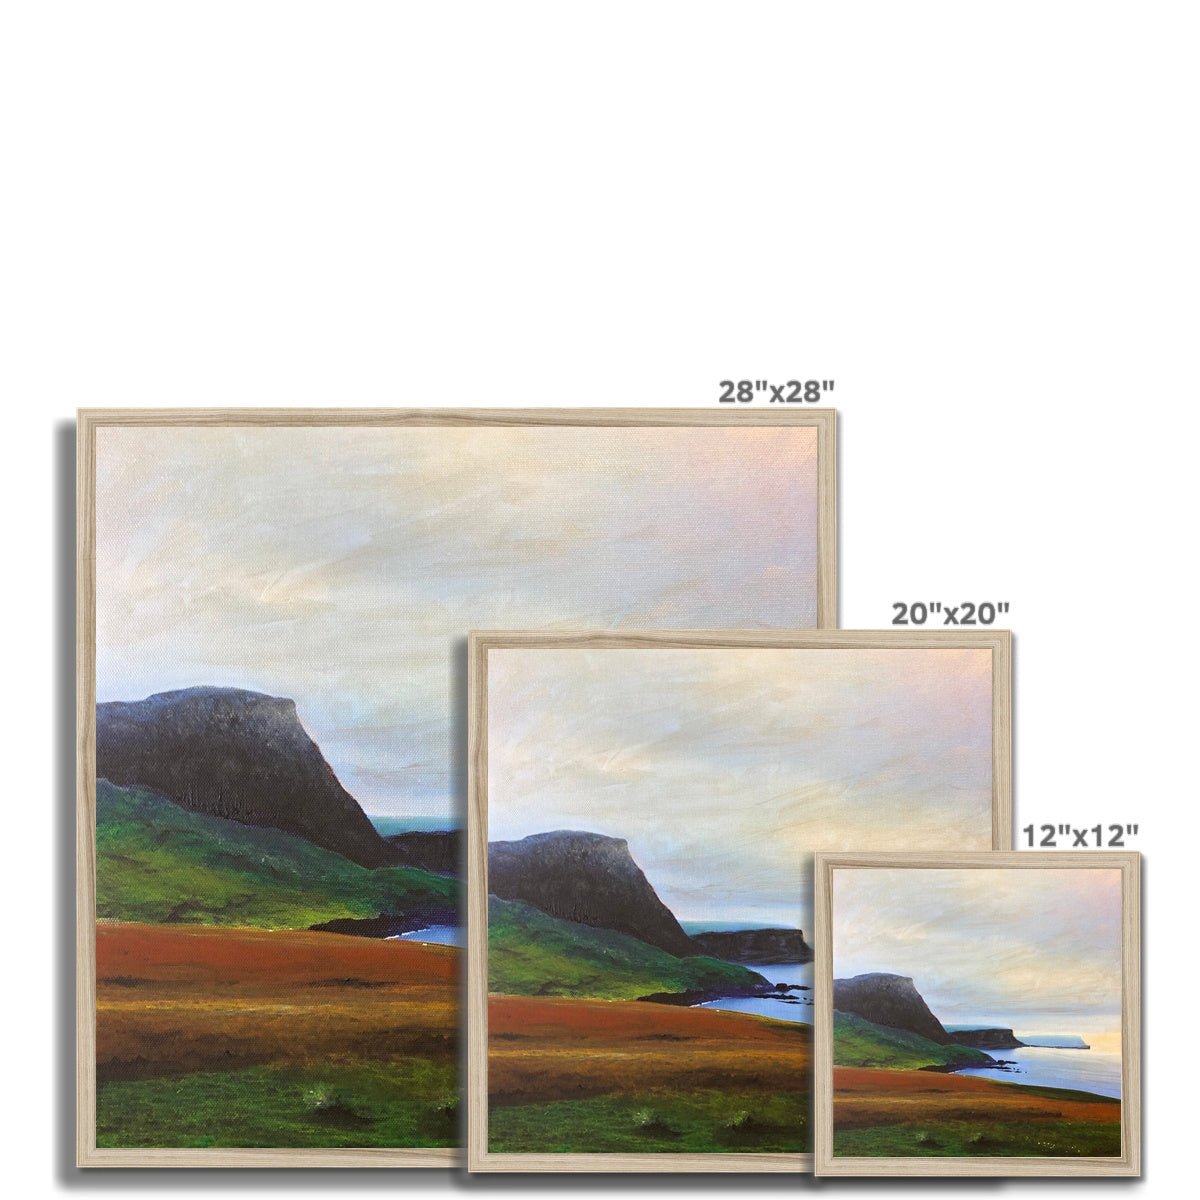 Neist Point Cliffs Skye Painting | Framed Prints From Scotland-Framed Prints-Skye Art Gallery-Paintings, Prints, Homeware, Art Gifts From Scotland By Scottish Artist Kevin Hunter